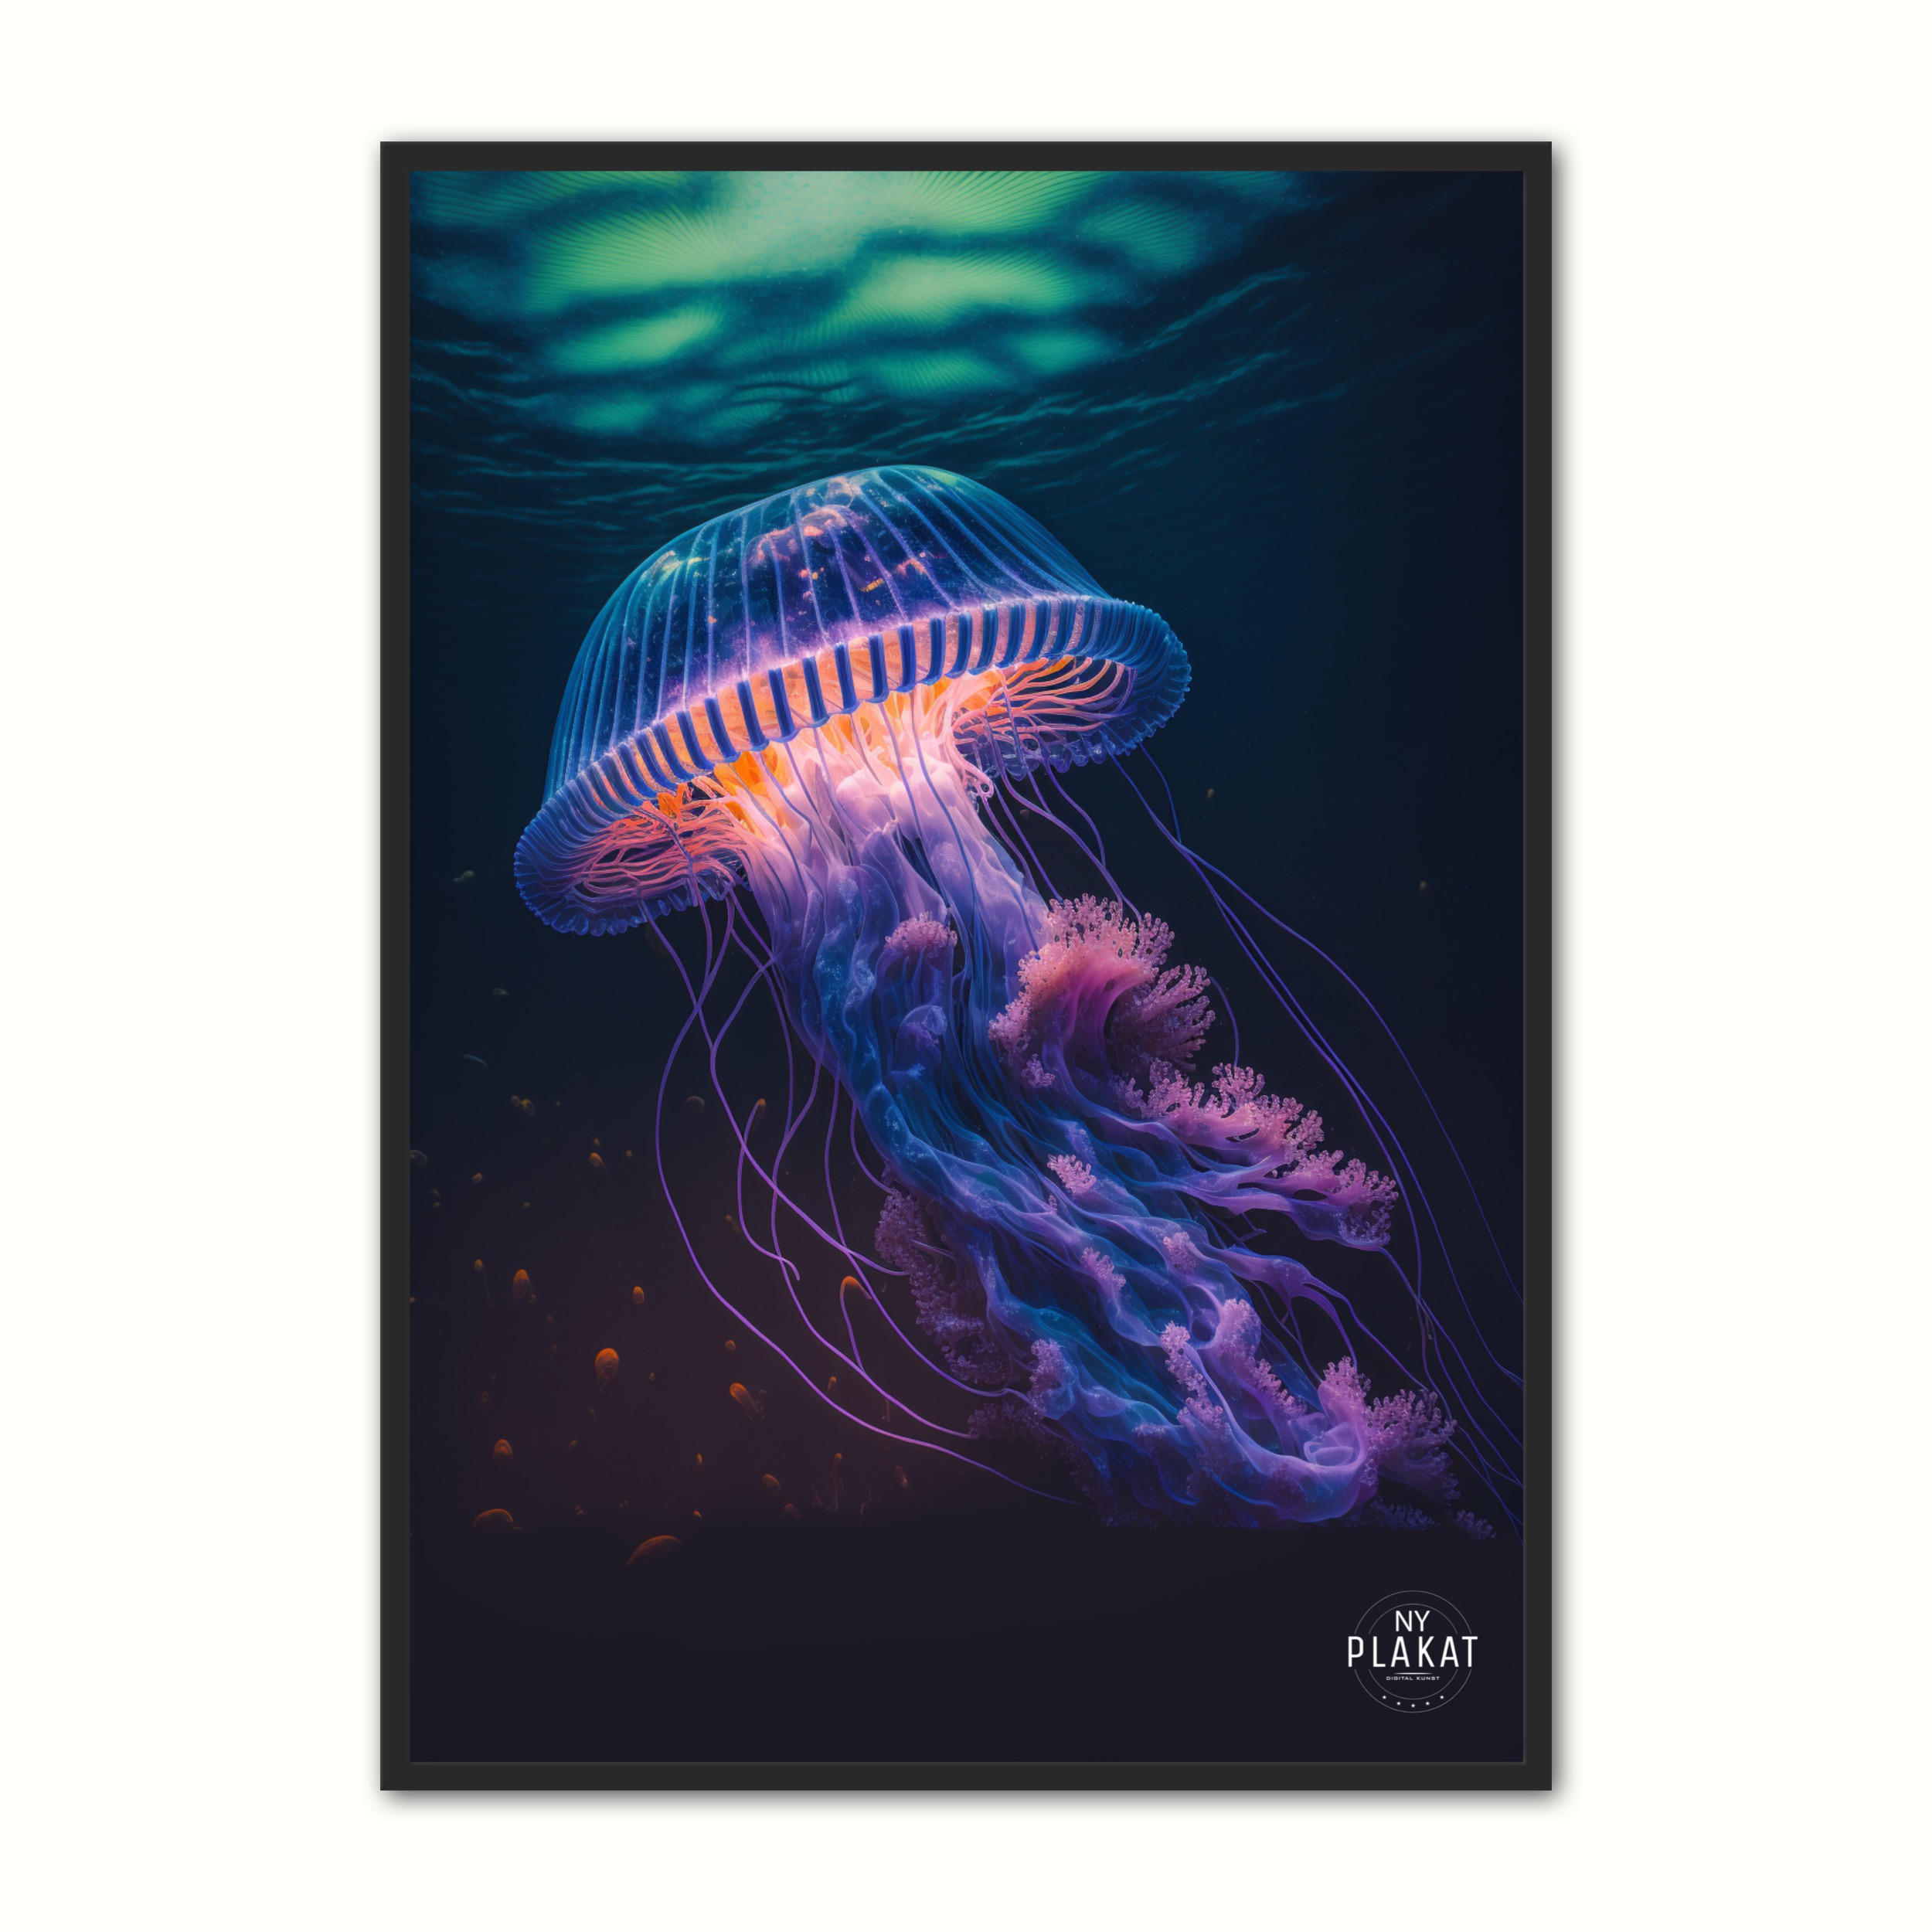 Se Jellyfish plakat No. 2 30 x 40 cm hos Nyplakat.dk